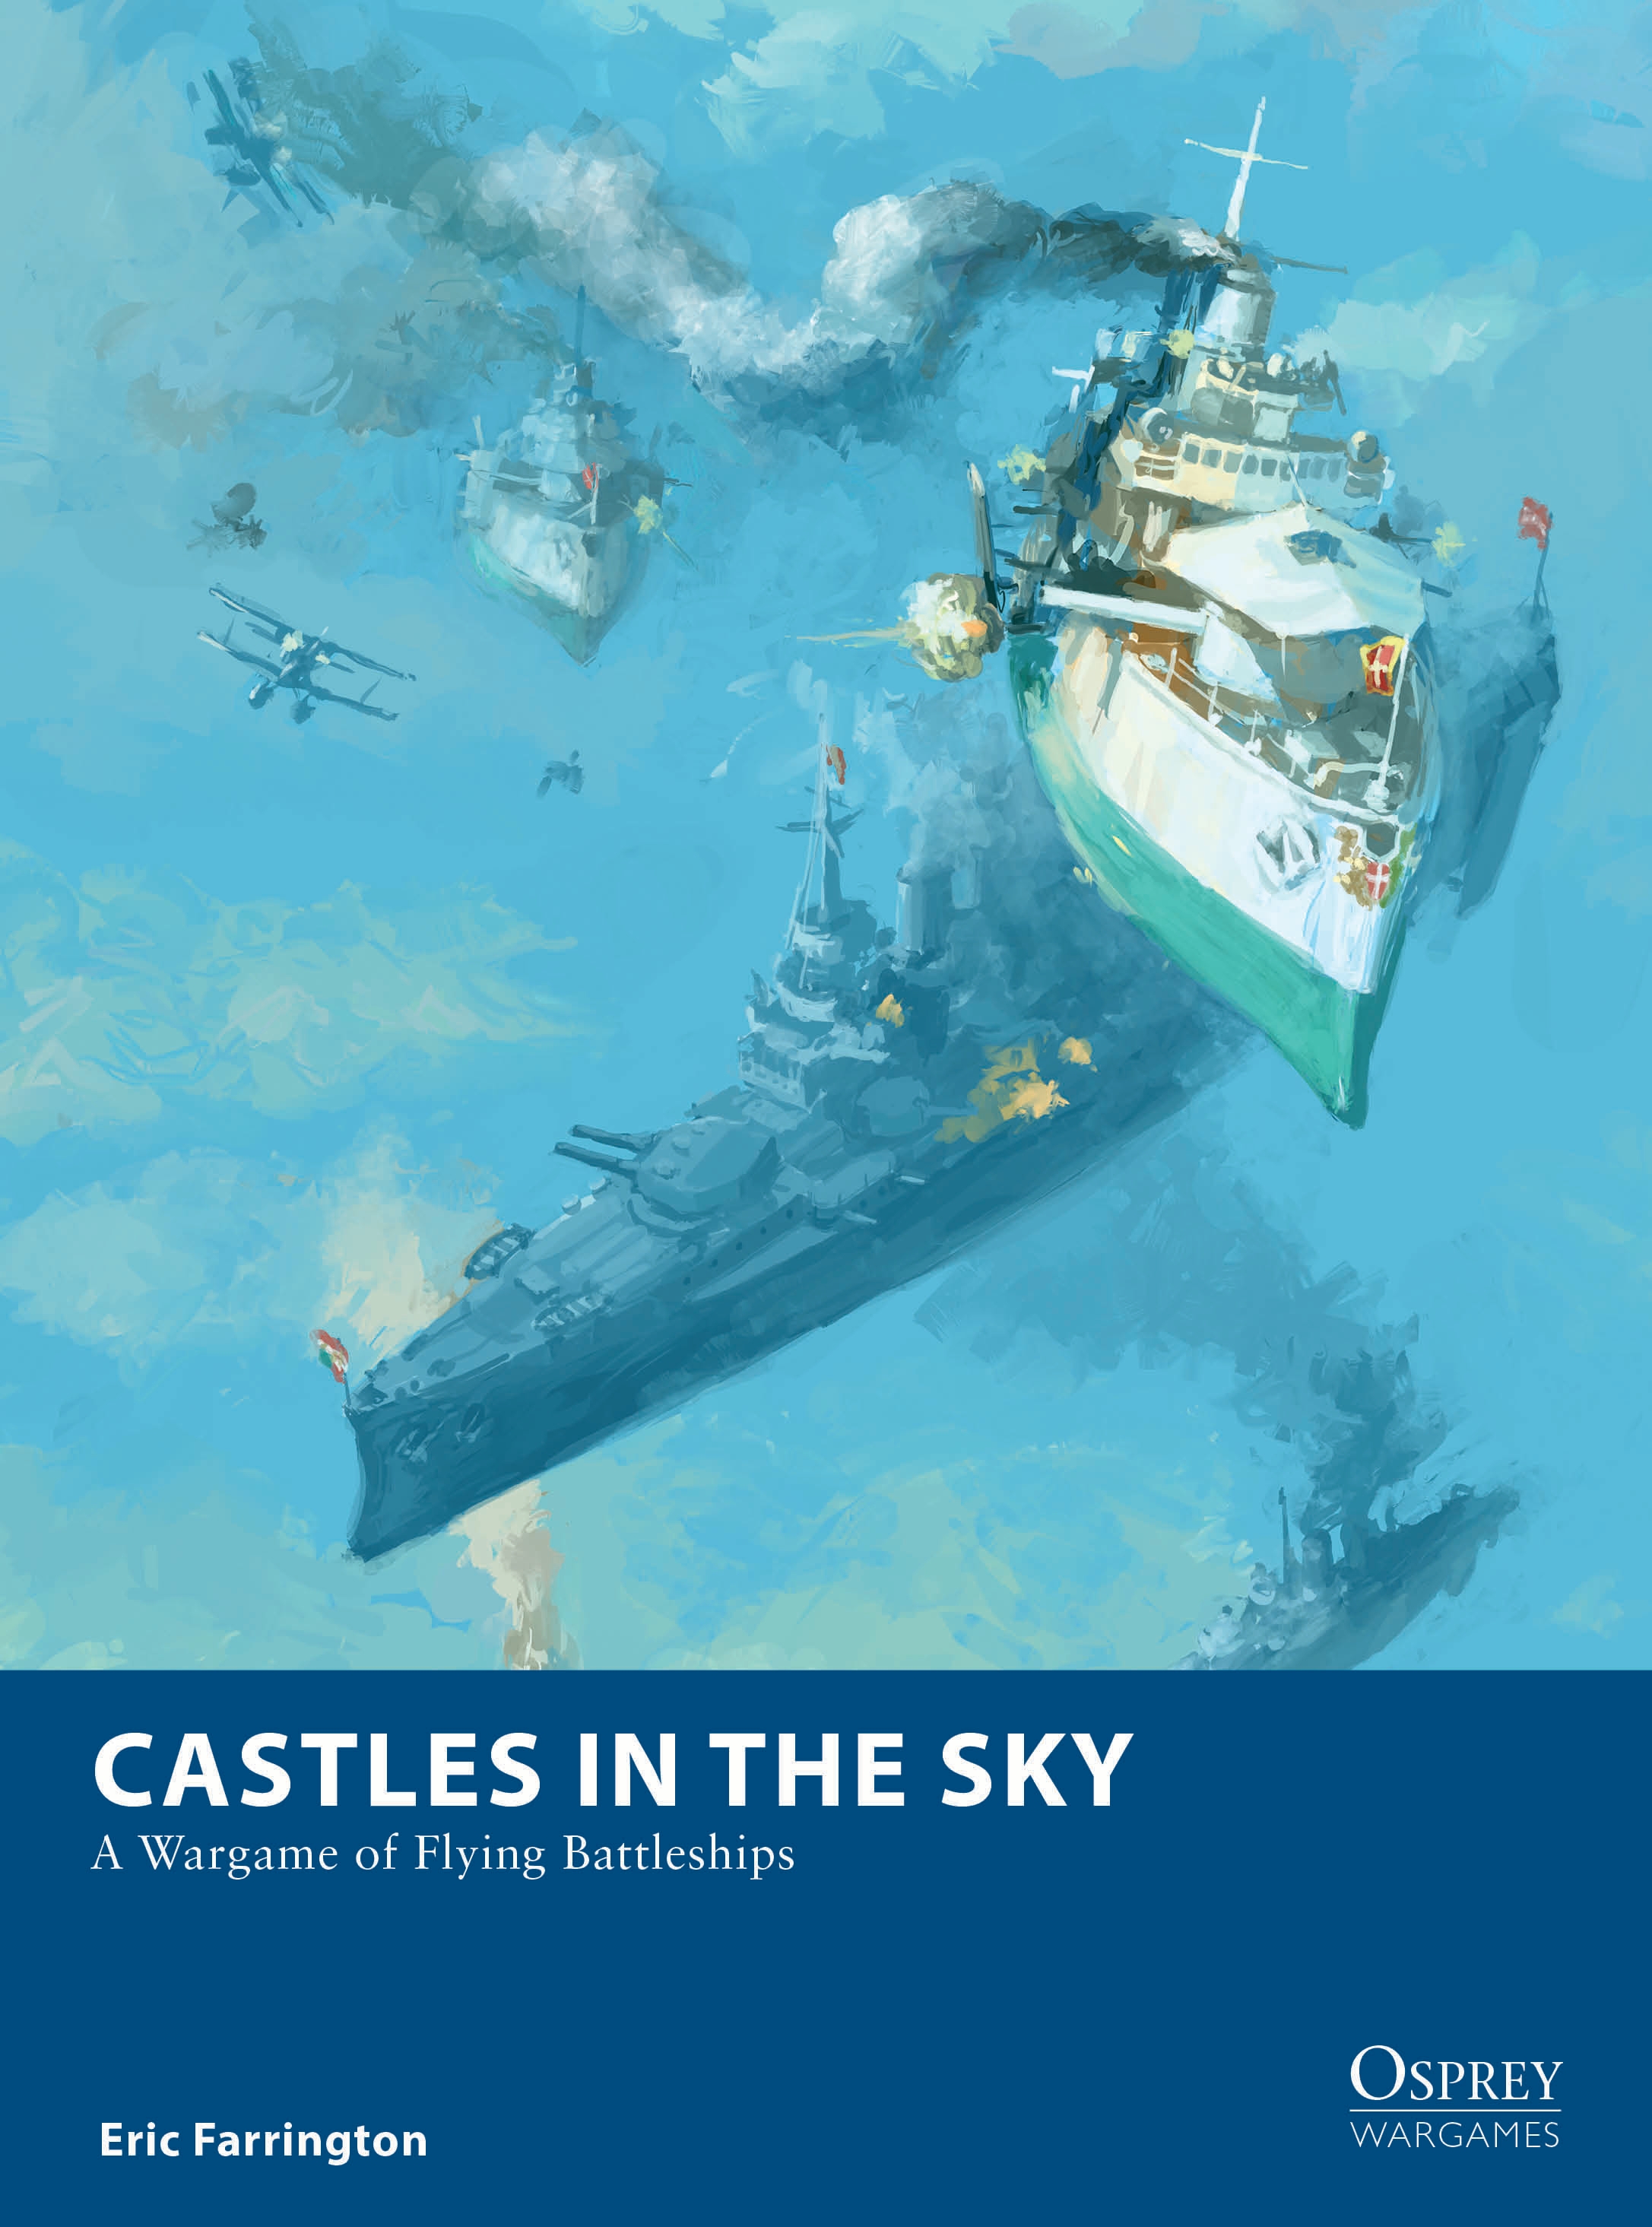 Castles in the Sky cover art